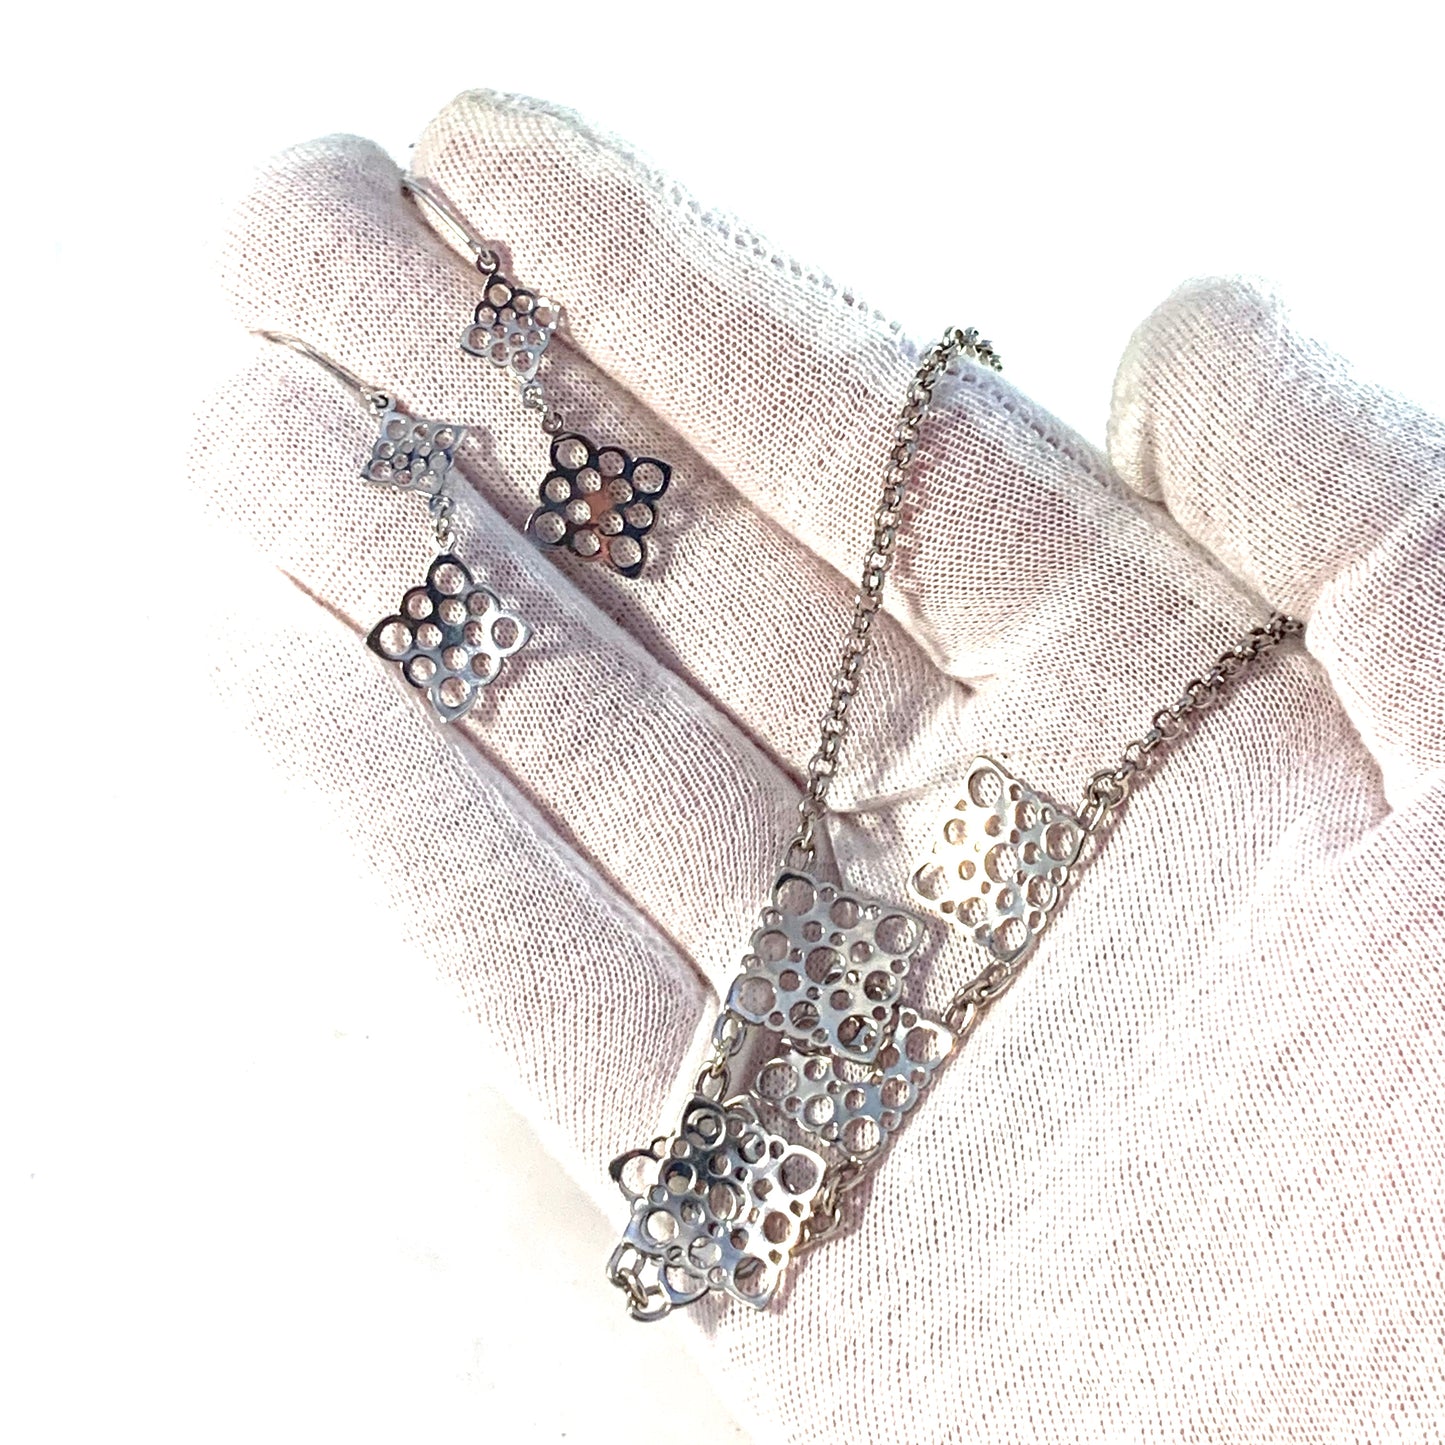 Liisa Vitali for Kultakeskus, Finland Vintage Sterling Silver Necklace and Earrings